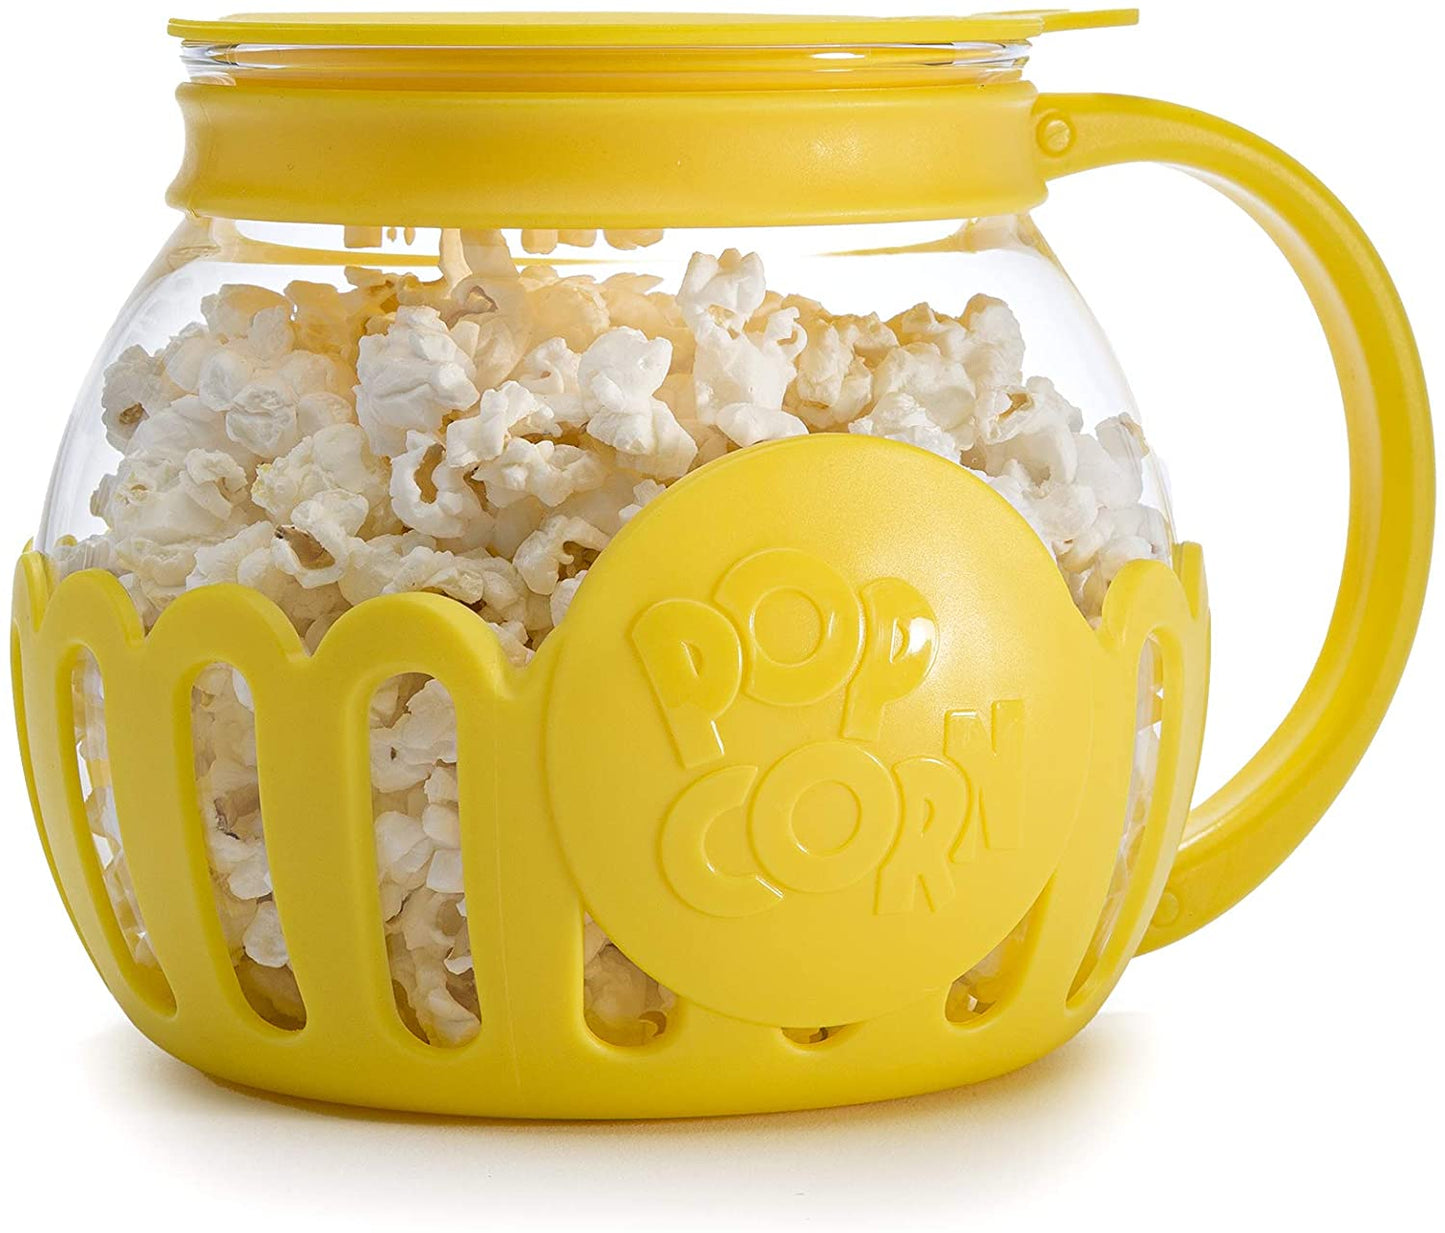 Ecolution Original Microwave Micro-Pop Popcorn Popper, Borosilicate Glass, 3-in-1 Silicone Lid, Dishwasher Safe, BPA Free, 1.5 Quart - Snack Size, Black